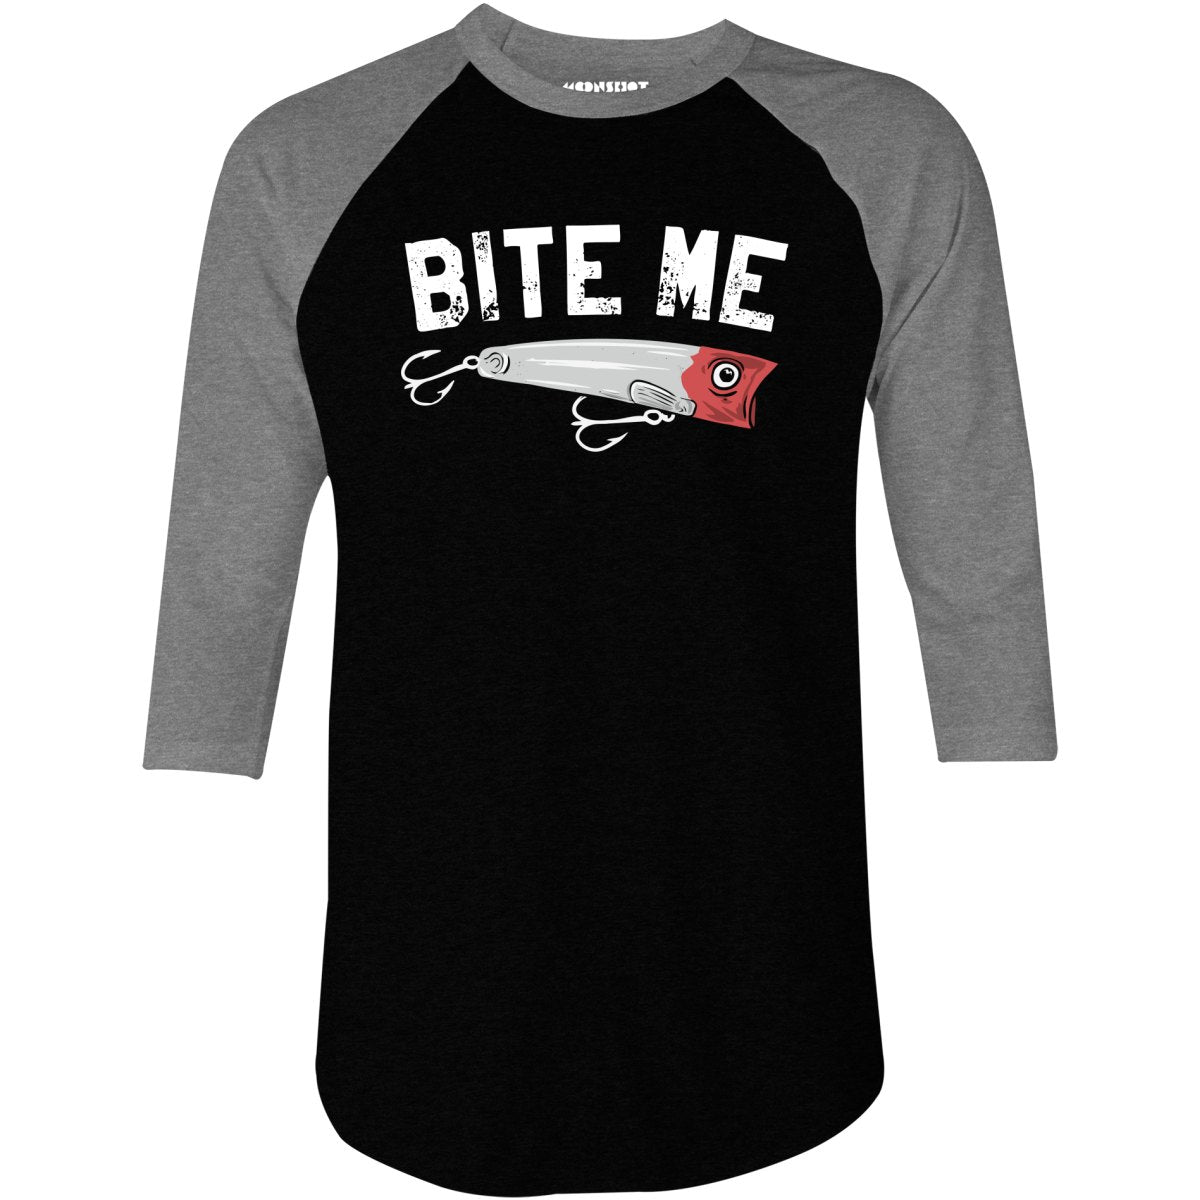 Bite Me - 3/4 Sleeve Raglan T-Shirt